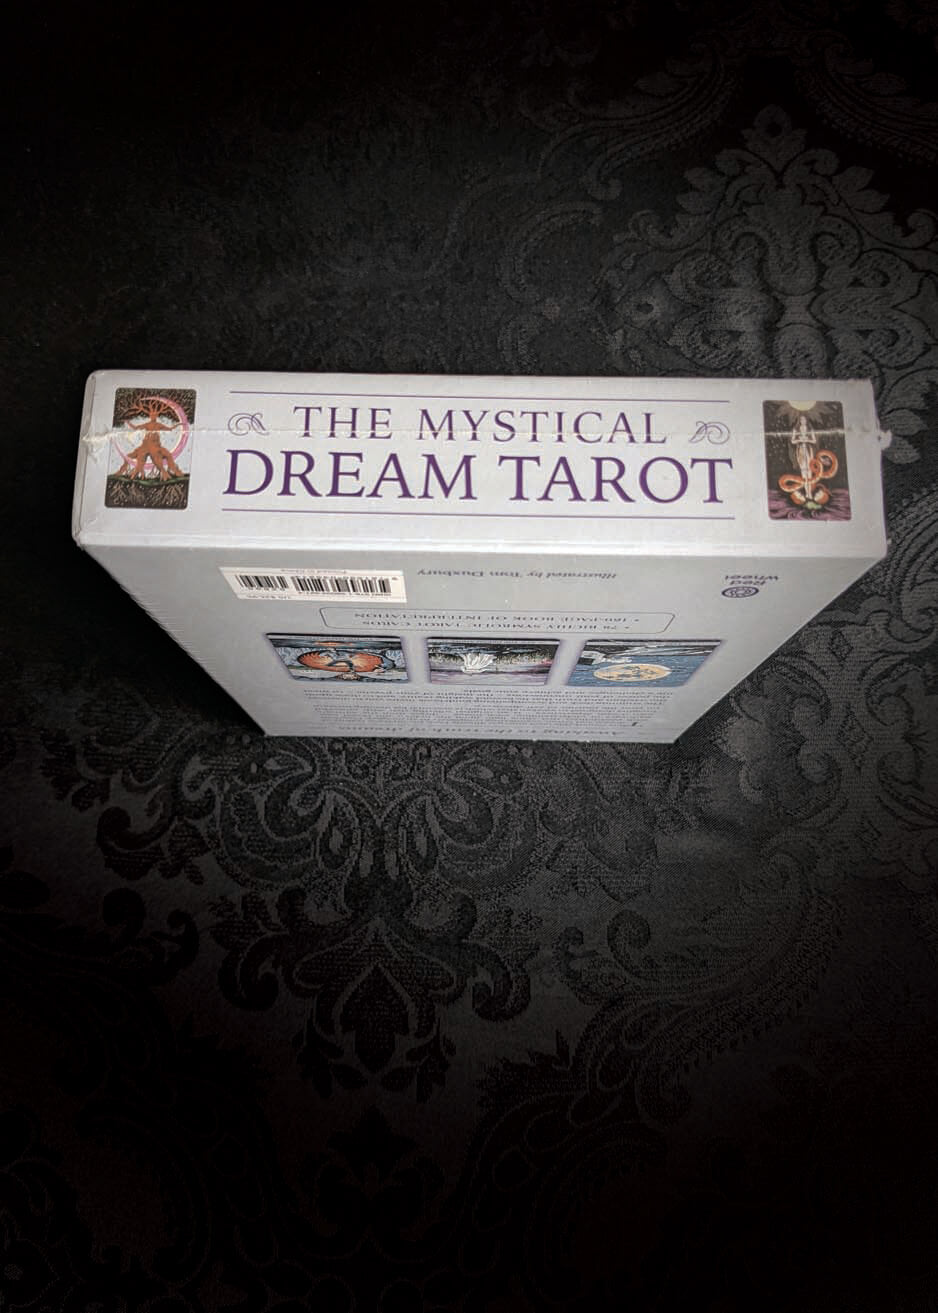 The Mystical Dream Tarot